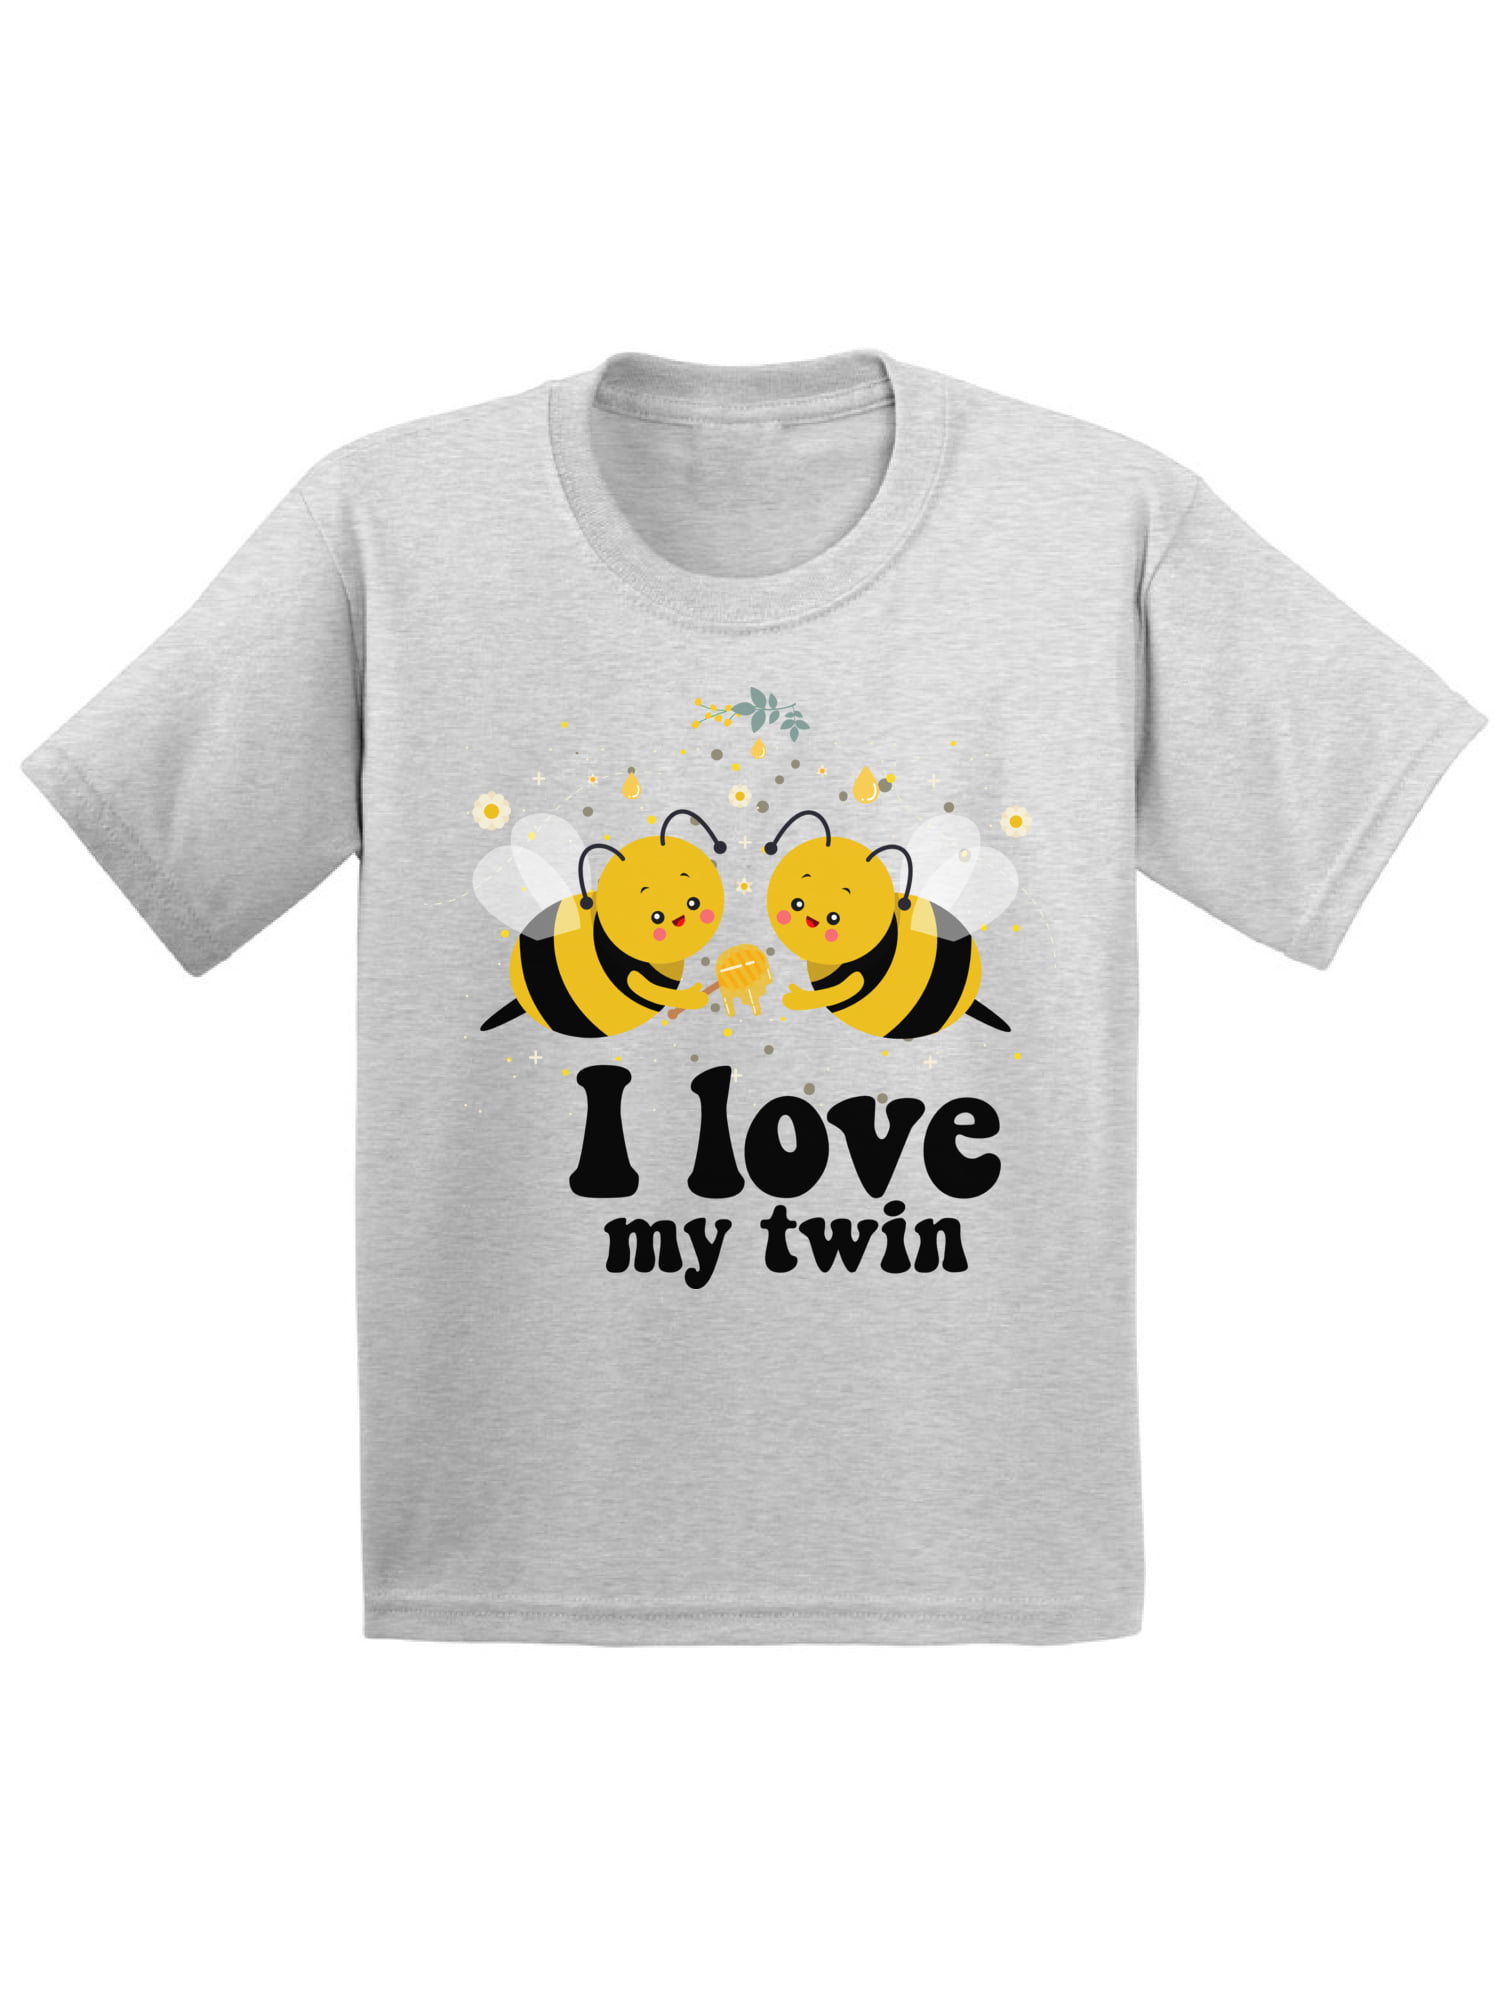 Peace Love Baseball Shirt Sport Inspired T-shirt Funny Tee Birthday Tshirt Idea Gift for Men Women Kid Youth Adult